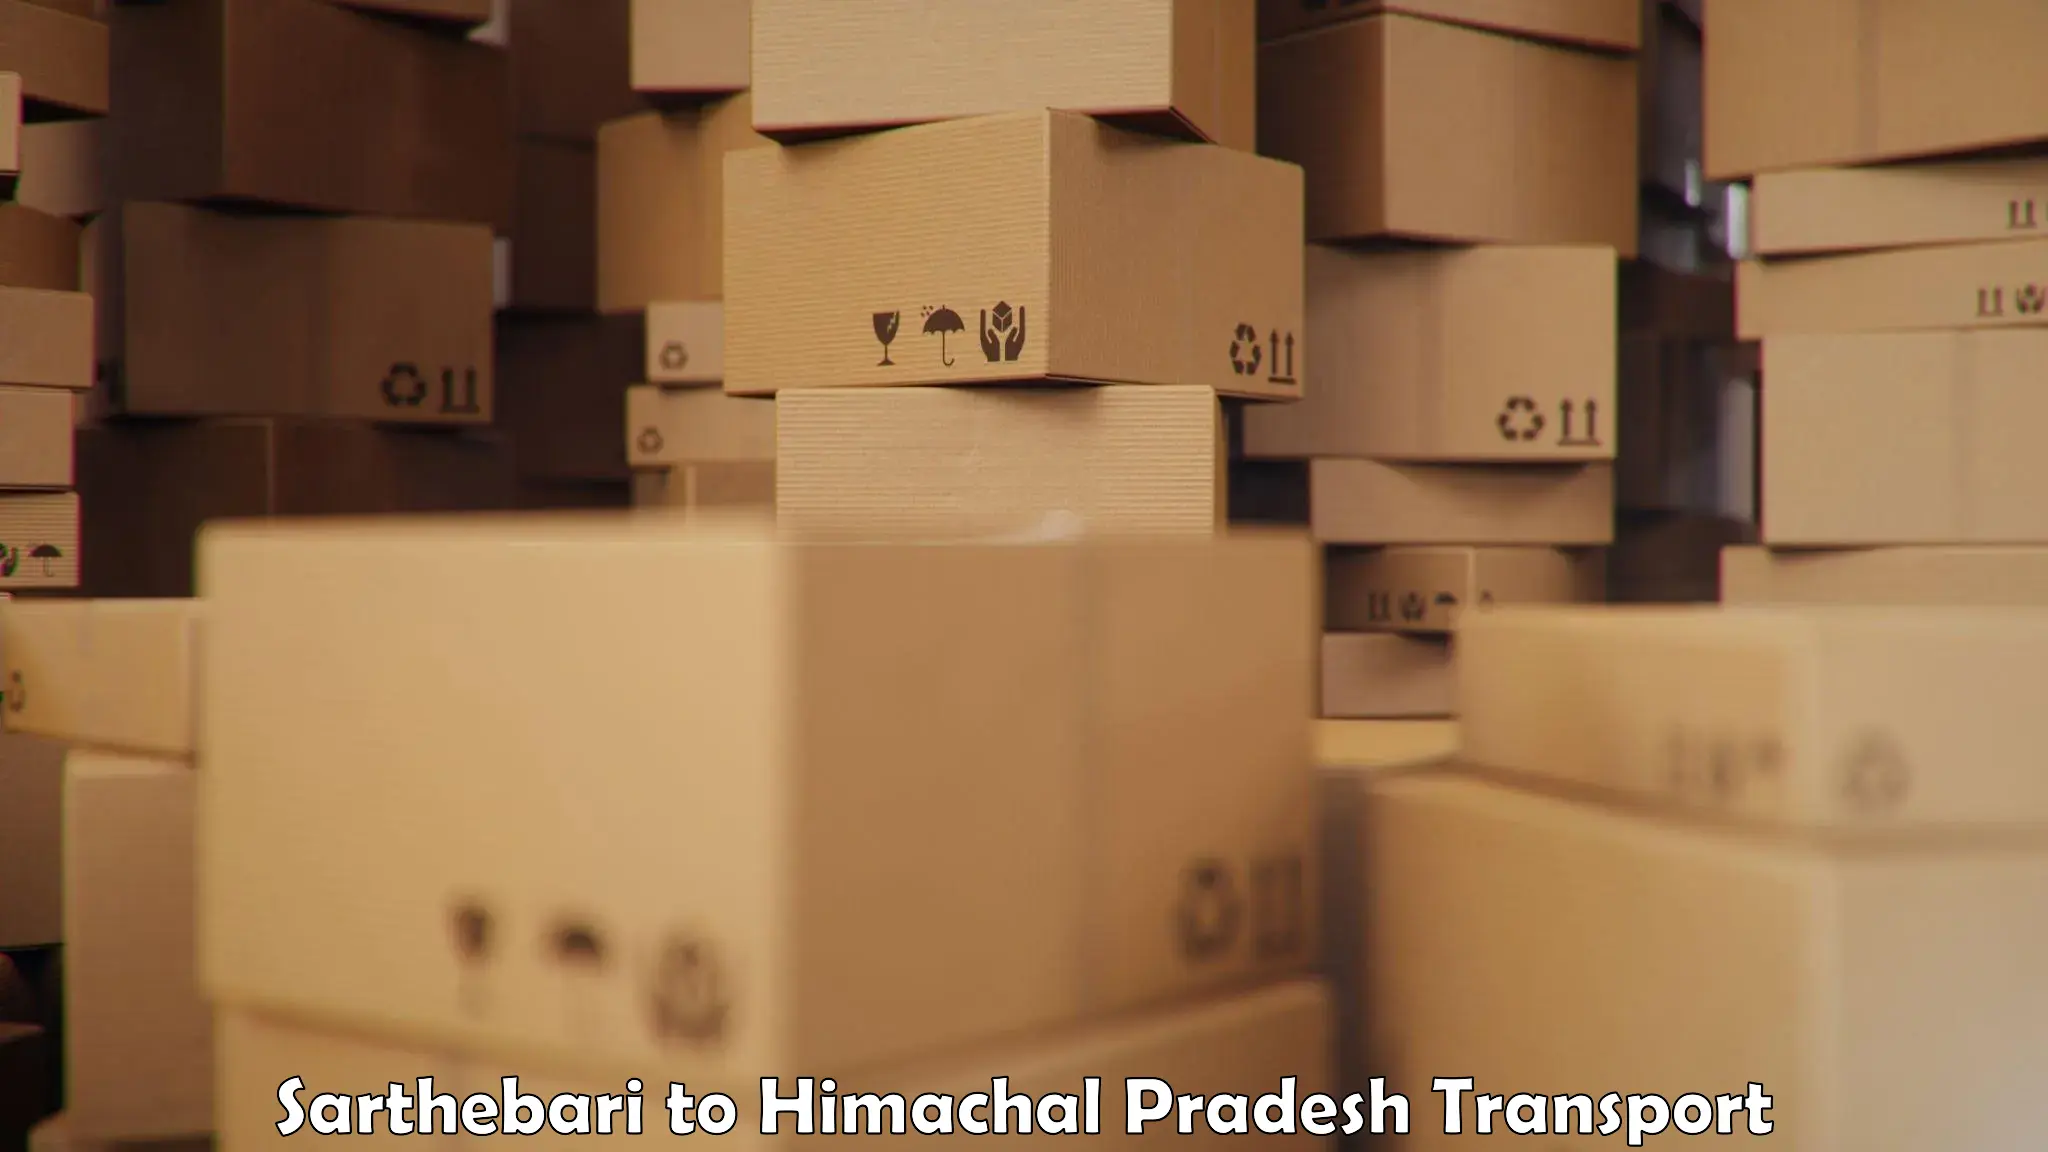 Truck transport companies in India Sarthebari to Himachal Pradesh